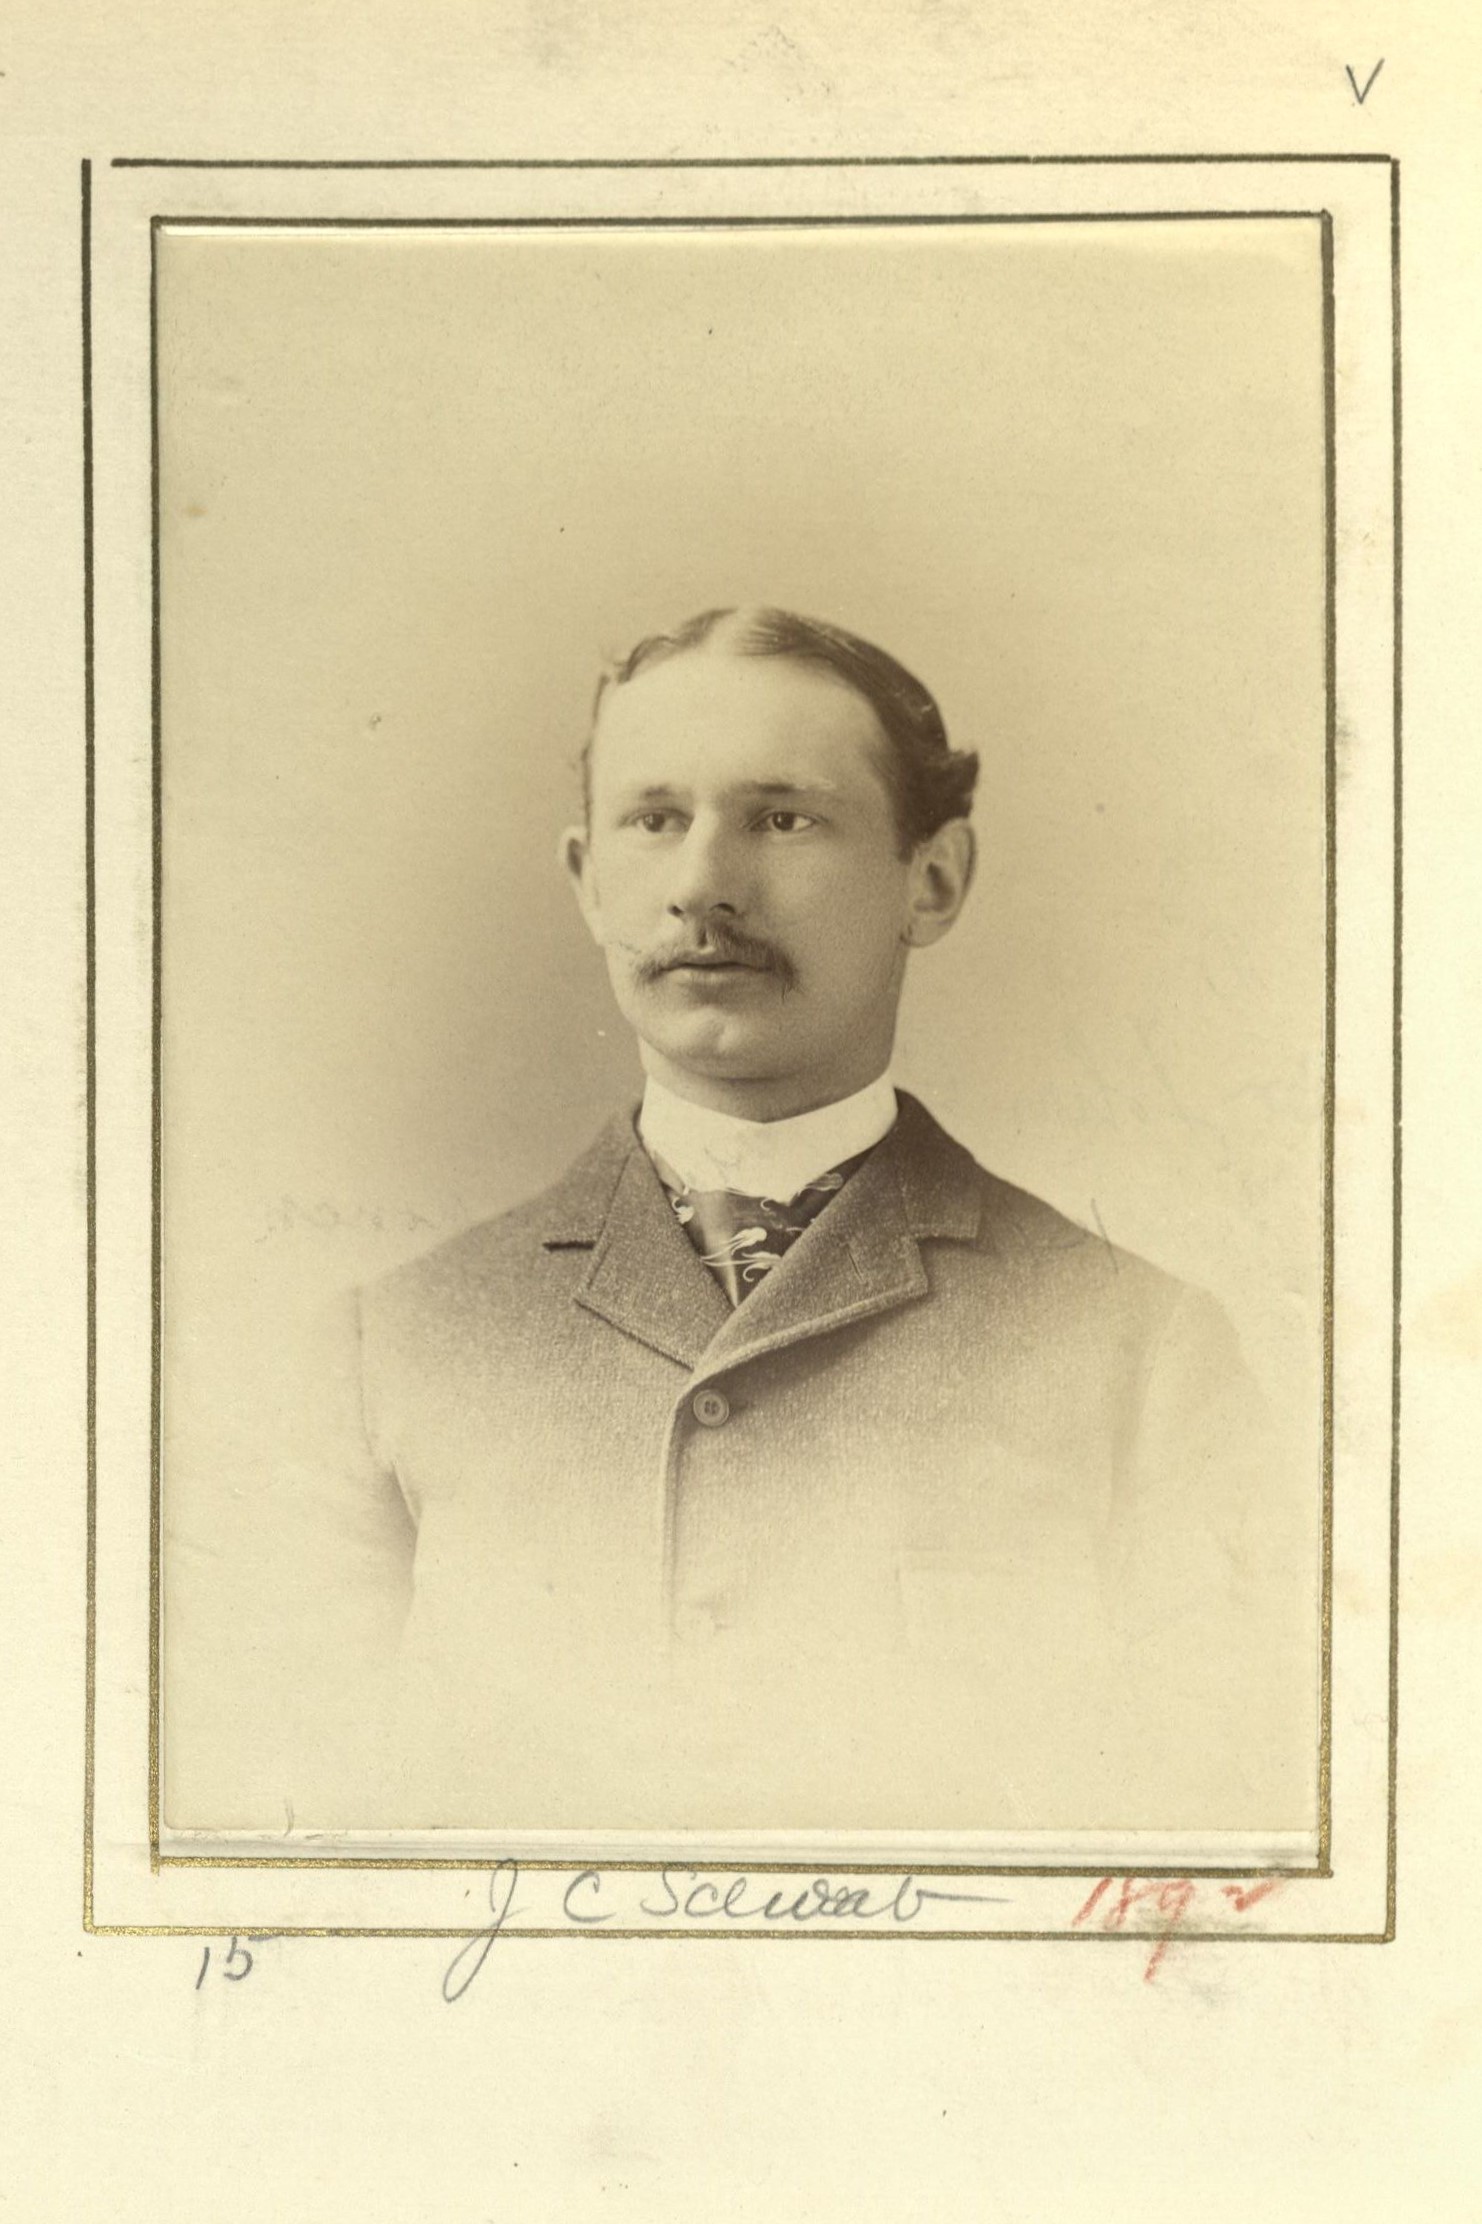 Member portrait of John C. Schwab